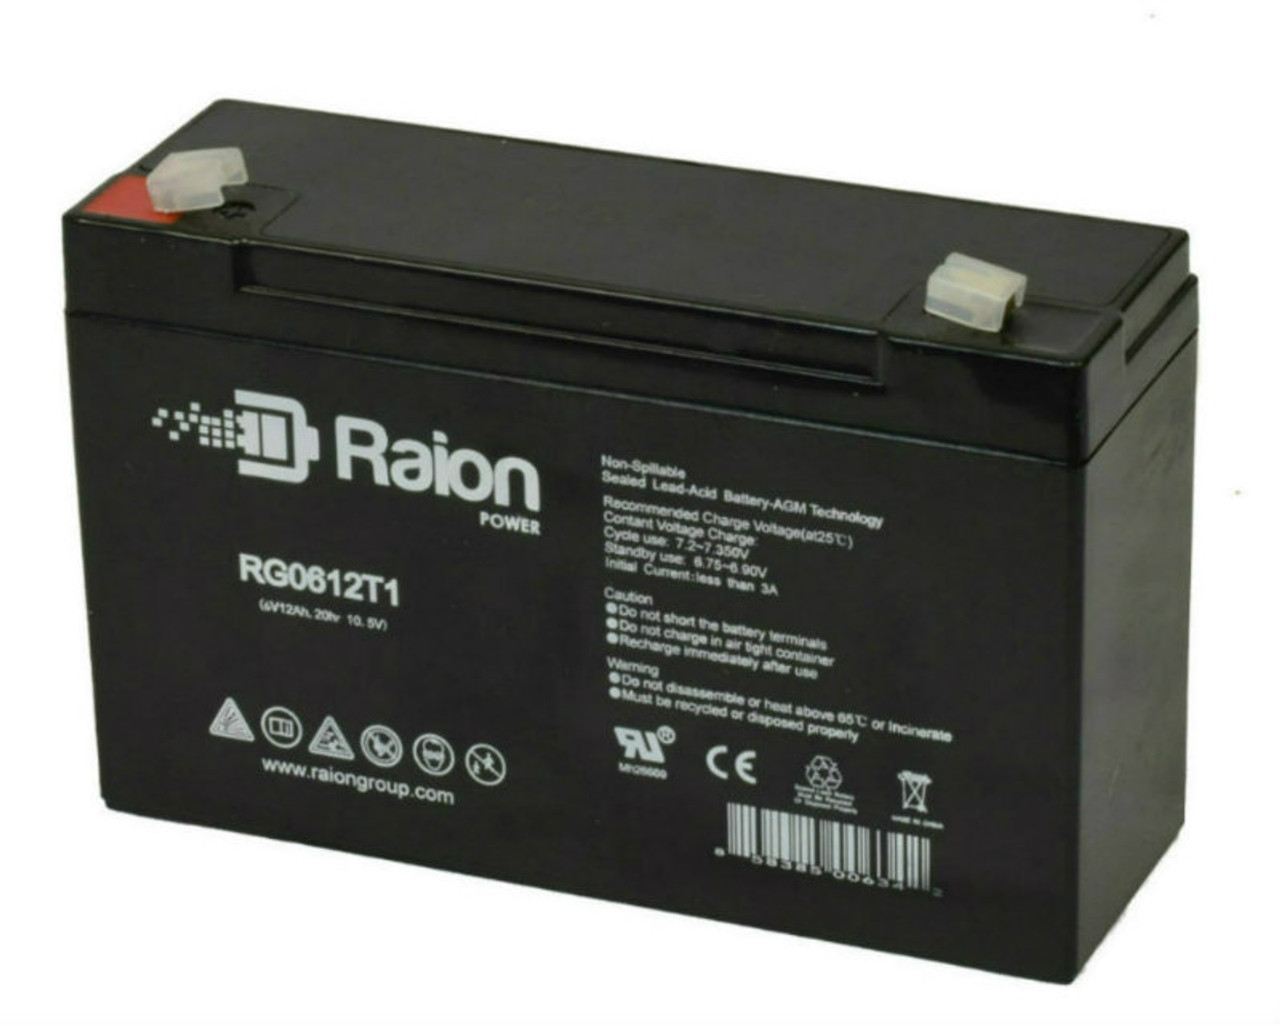 Raion Power RG06120T1 Replacement 6V 12Ah Emergency Light Battery for Prescolite E8191-1000